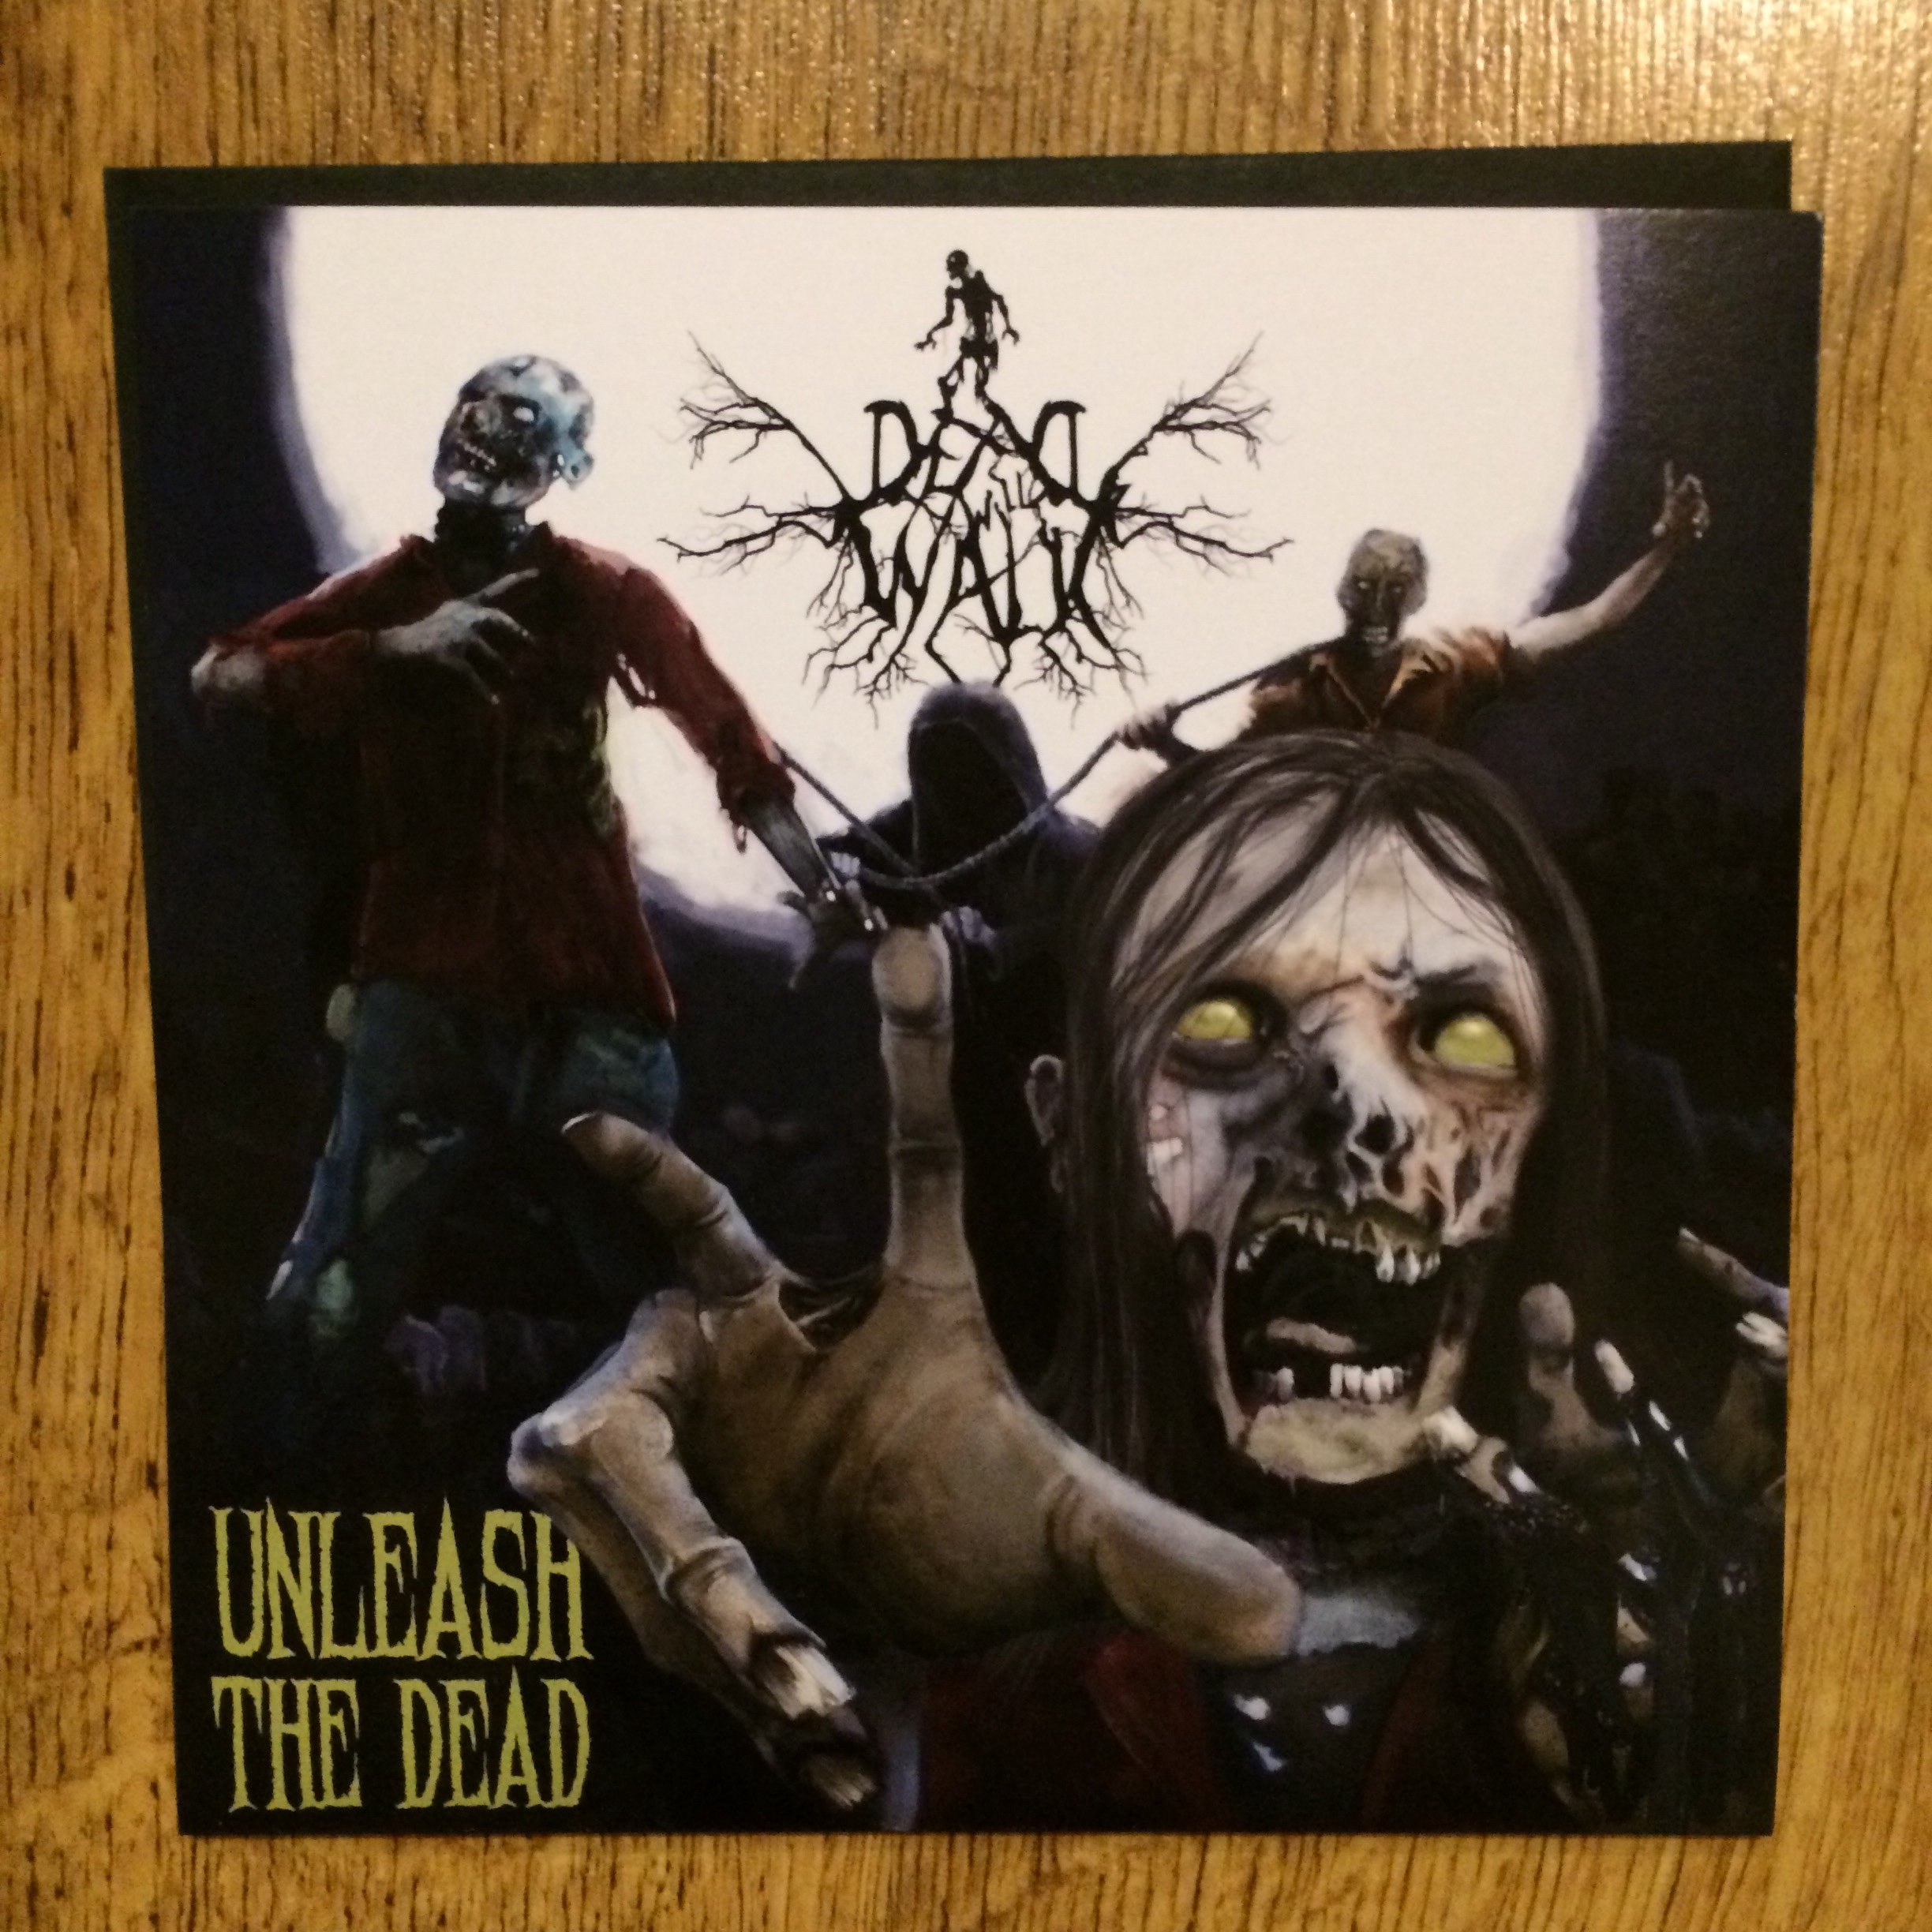 Photo of the Dead Will Walk - "Unleash the Dead" EP (Black vinyl)